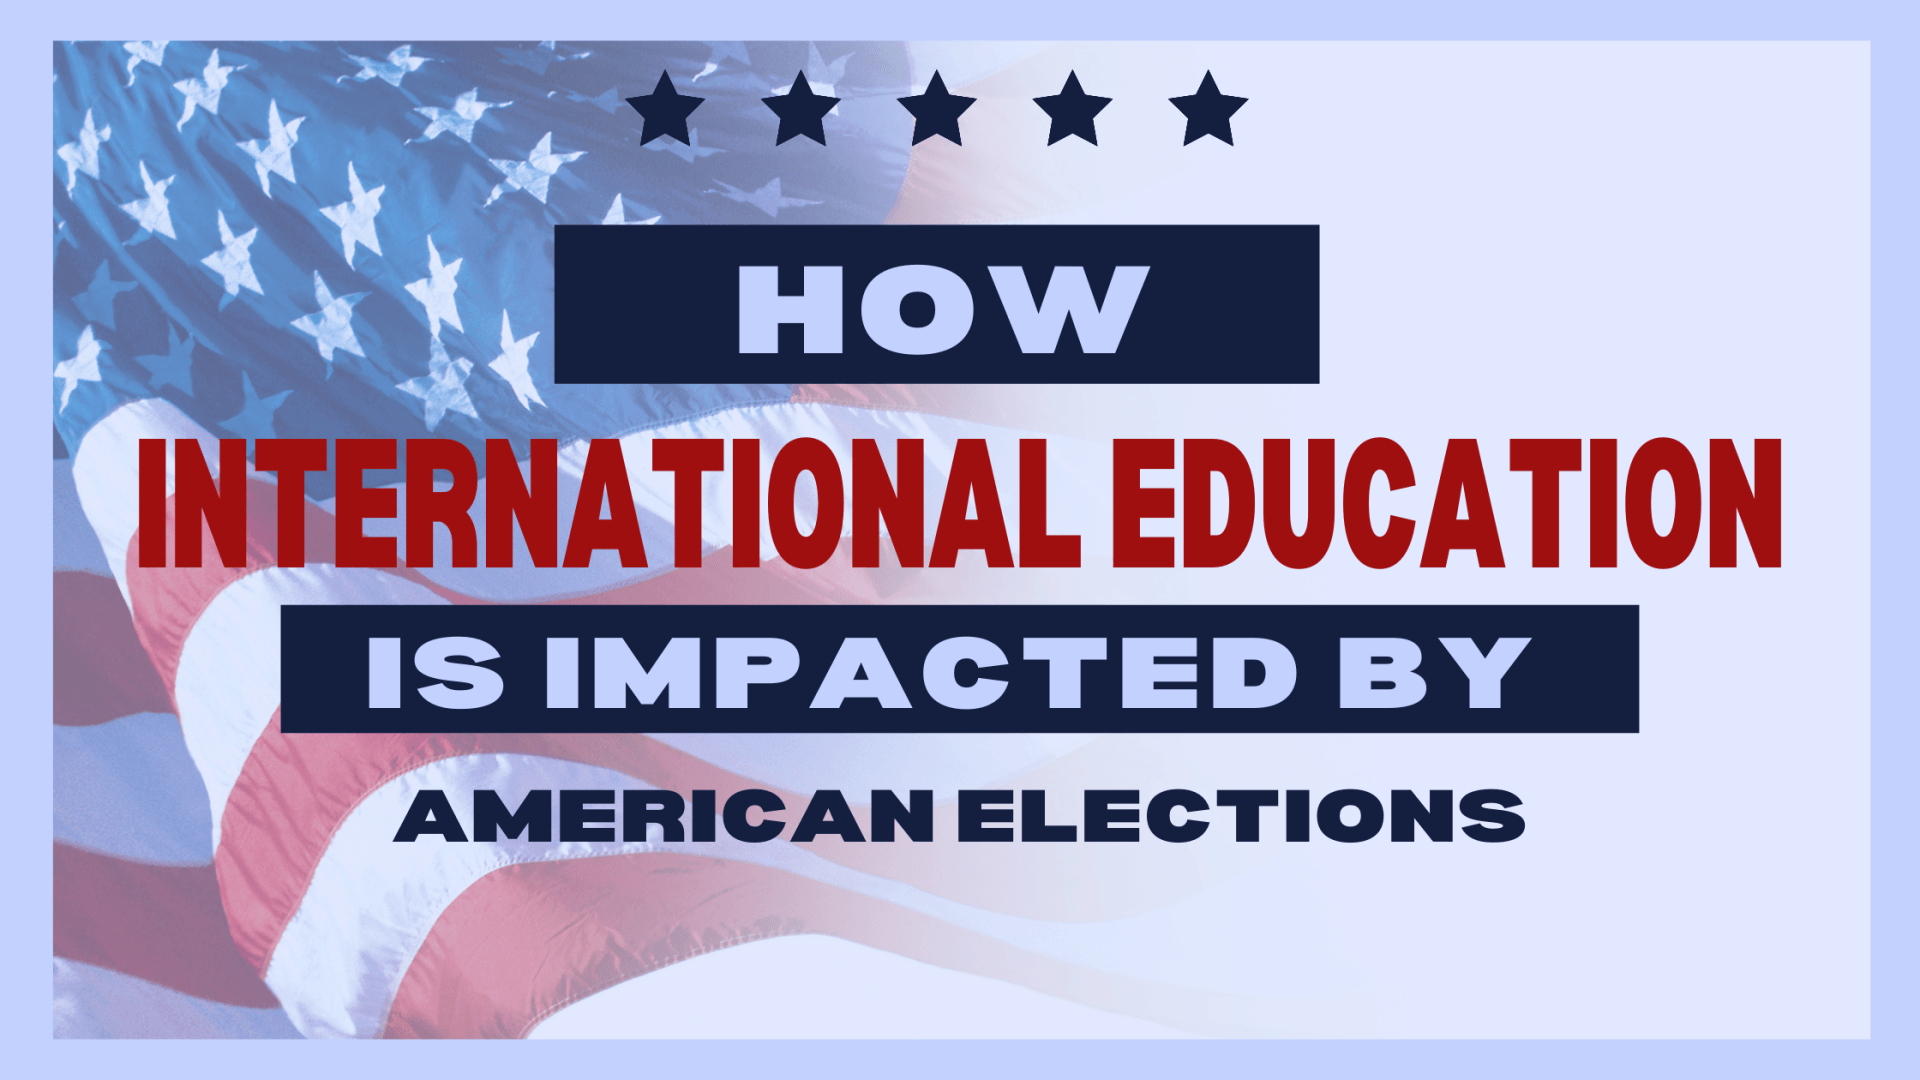 American | Elections | American Elections | Flag | American Flag | American Students | International Students | Higher Education | College | University